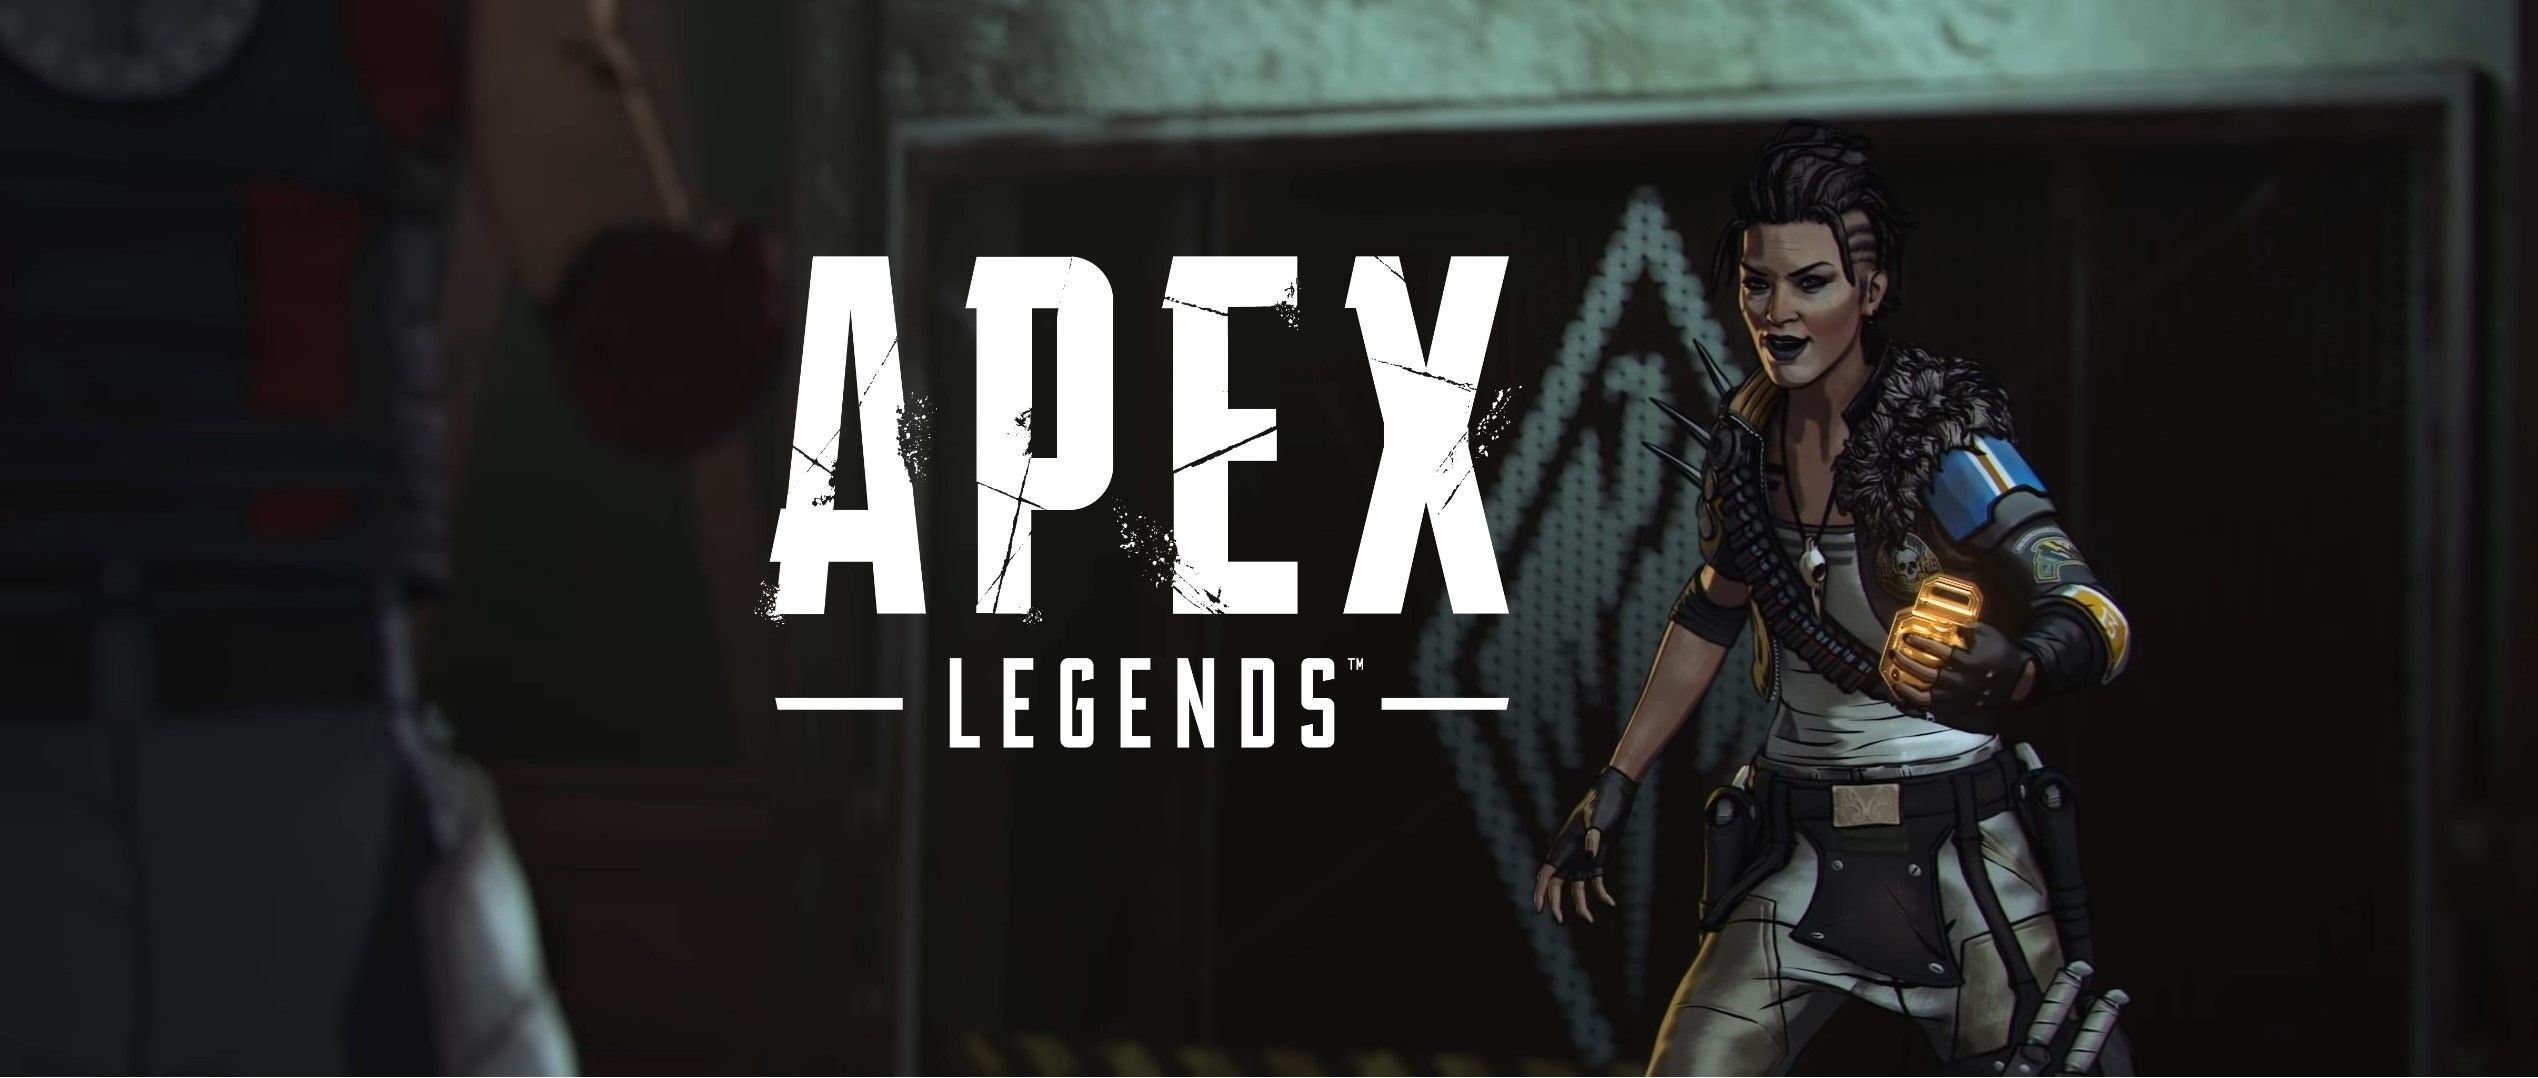 apex legends season 12 legend